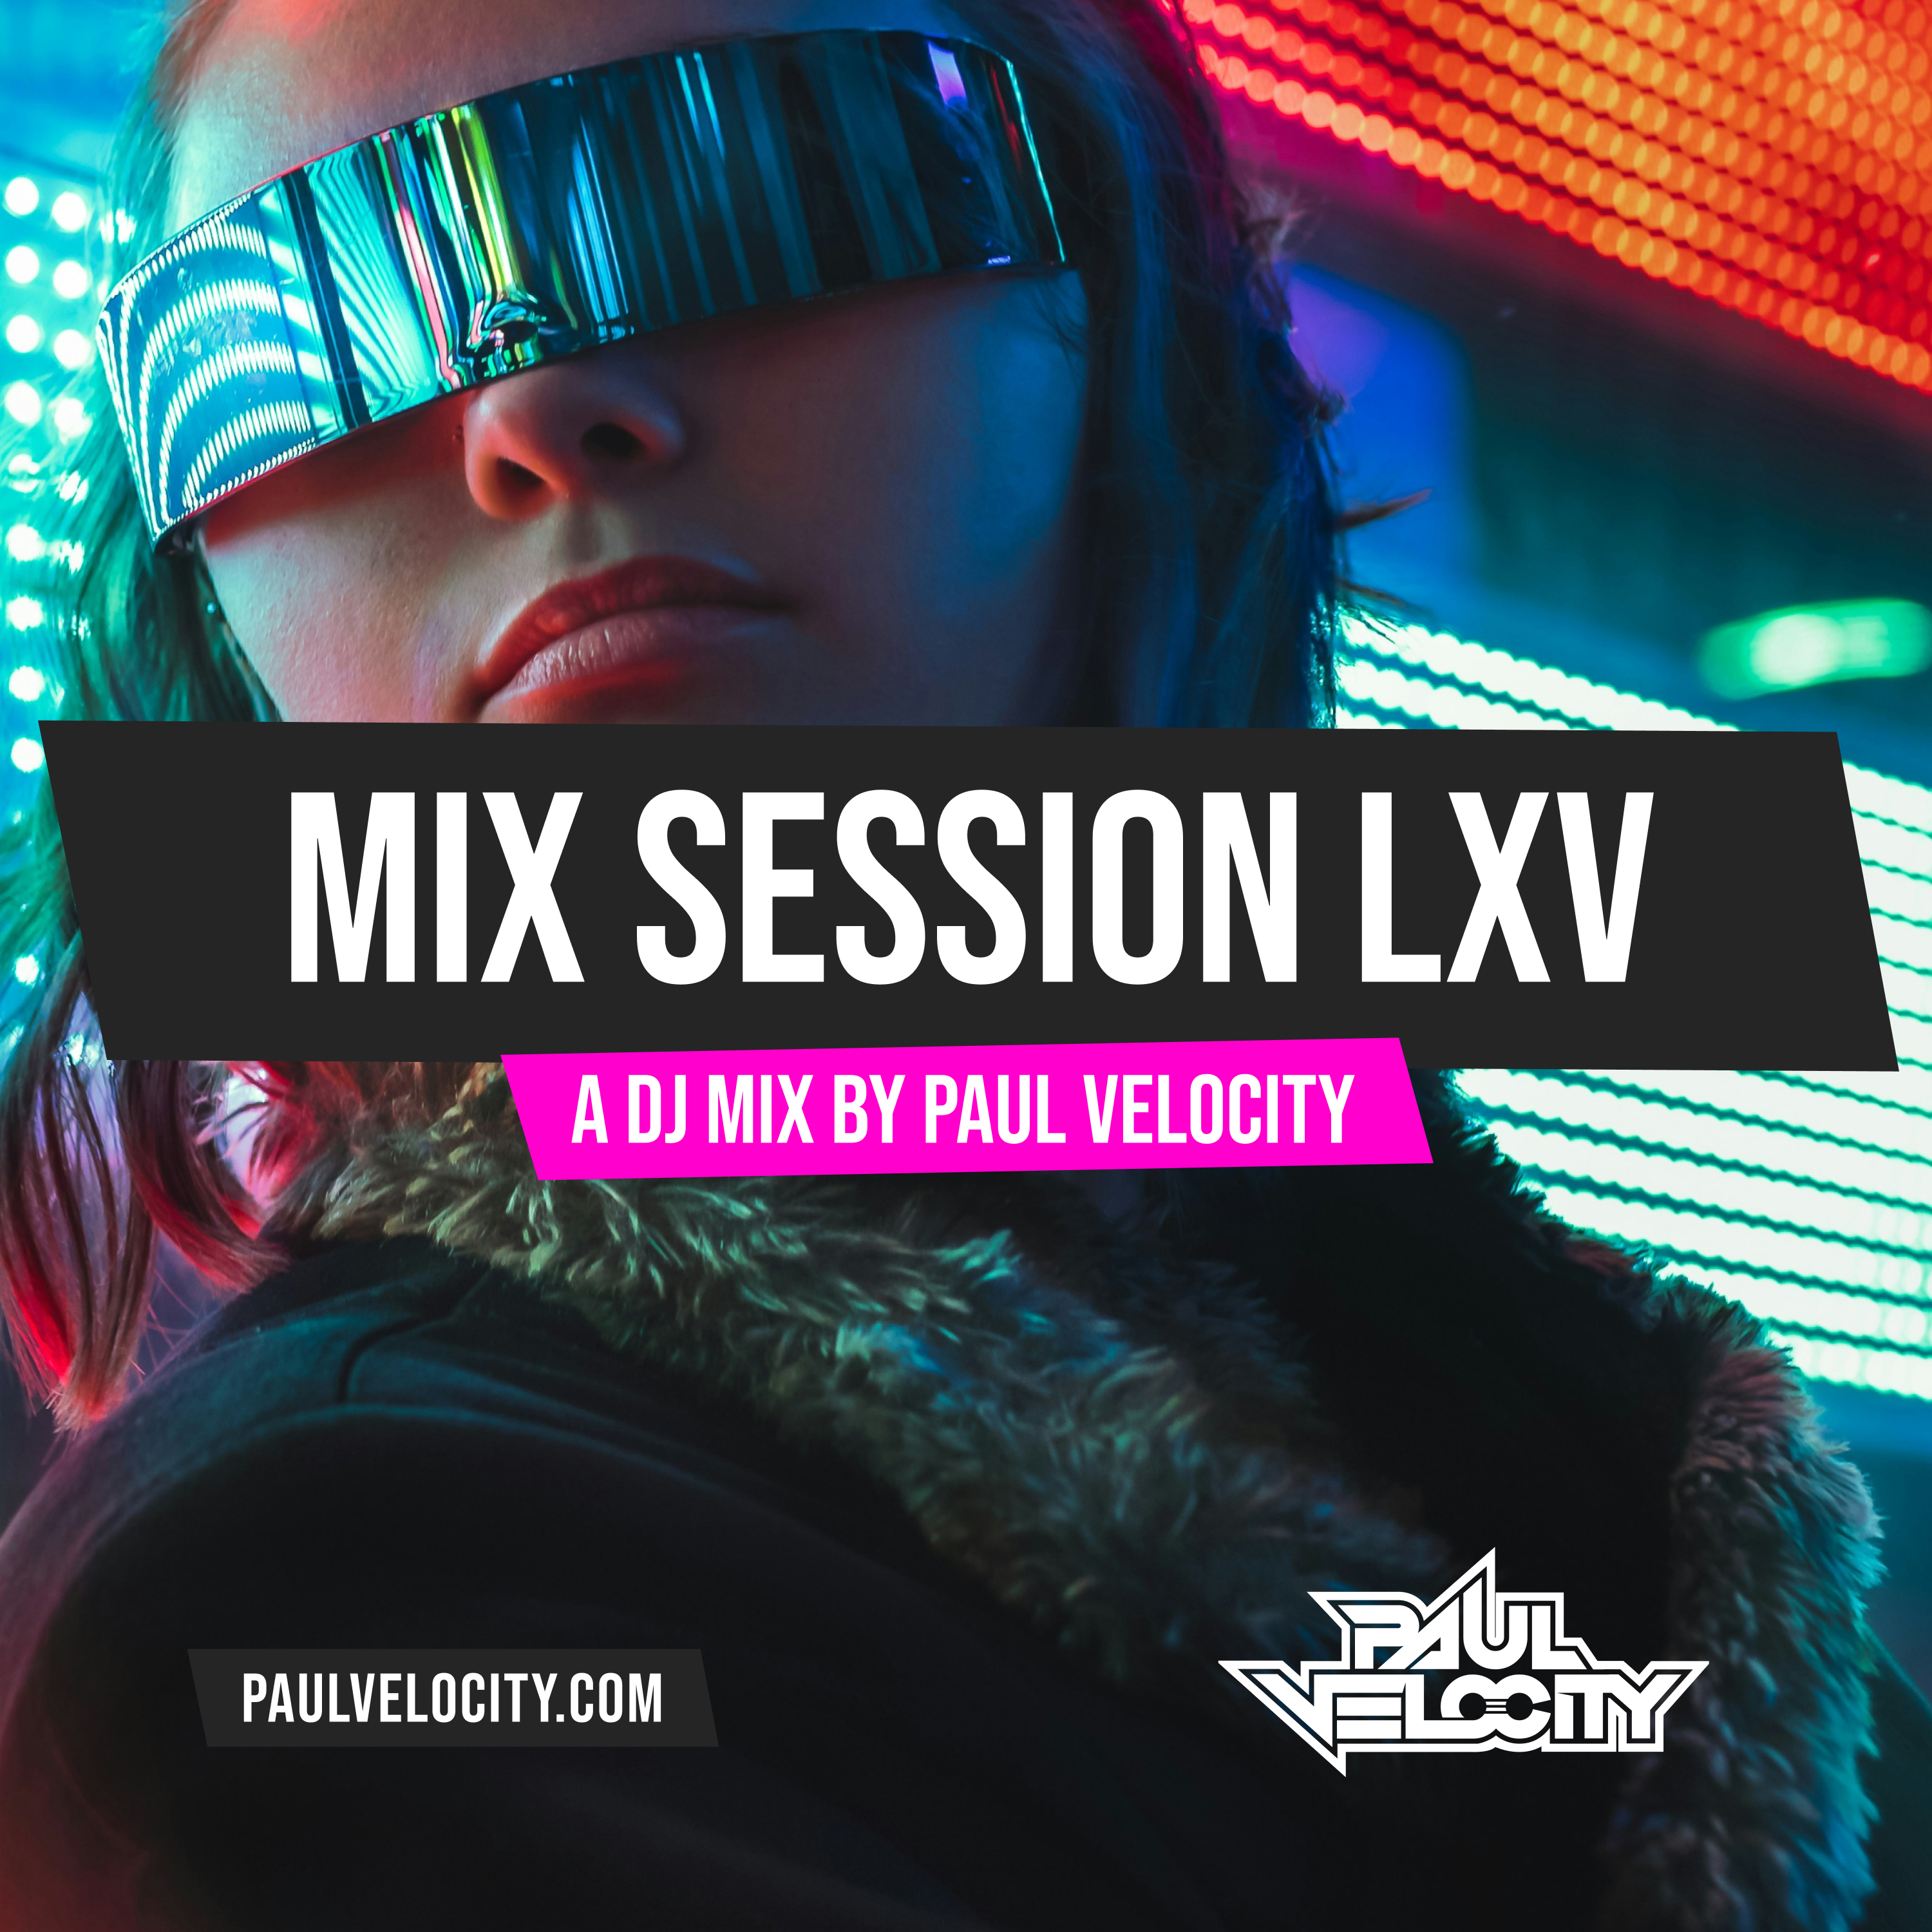 Mix Session LXV